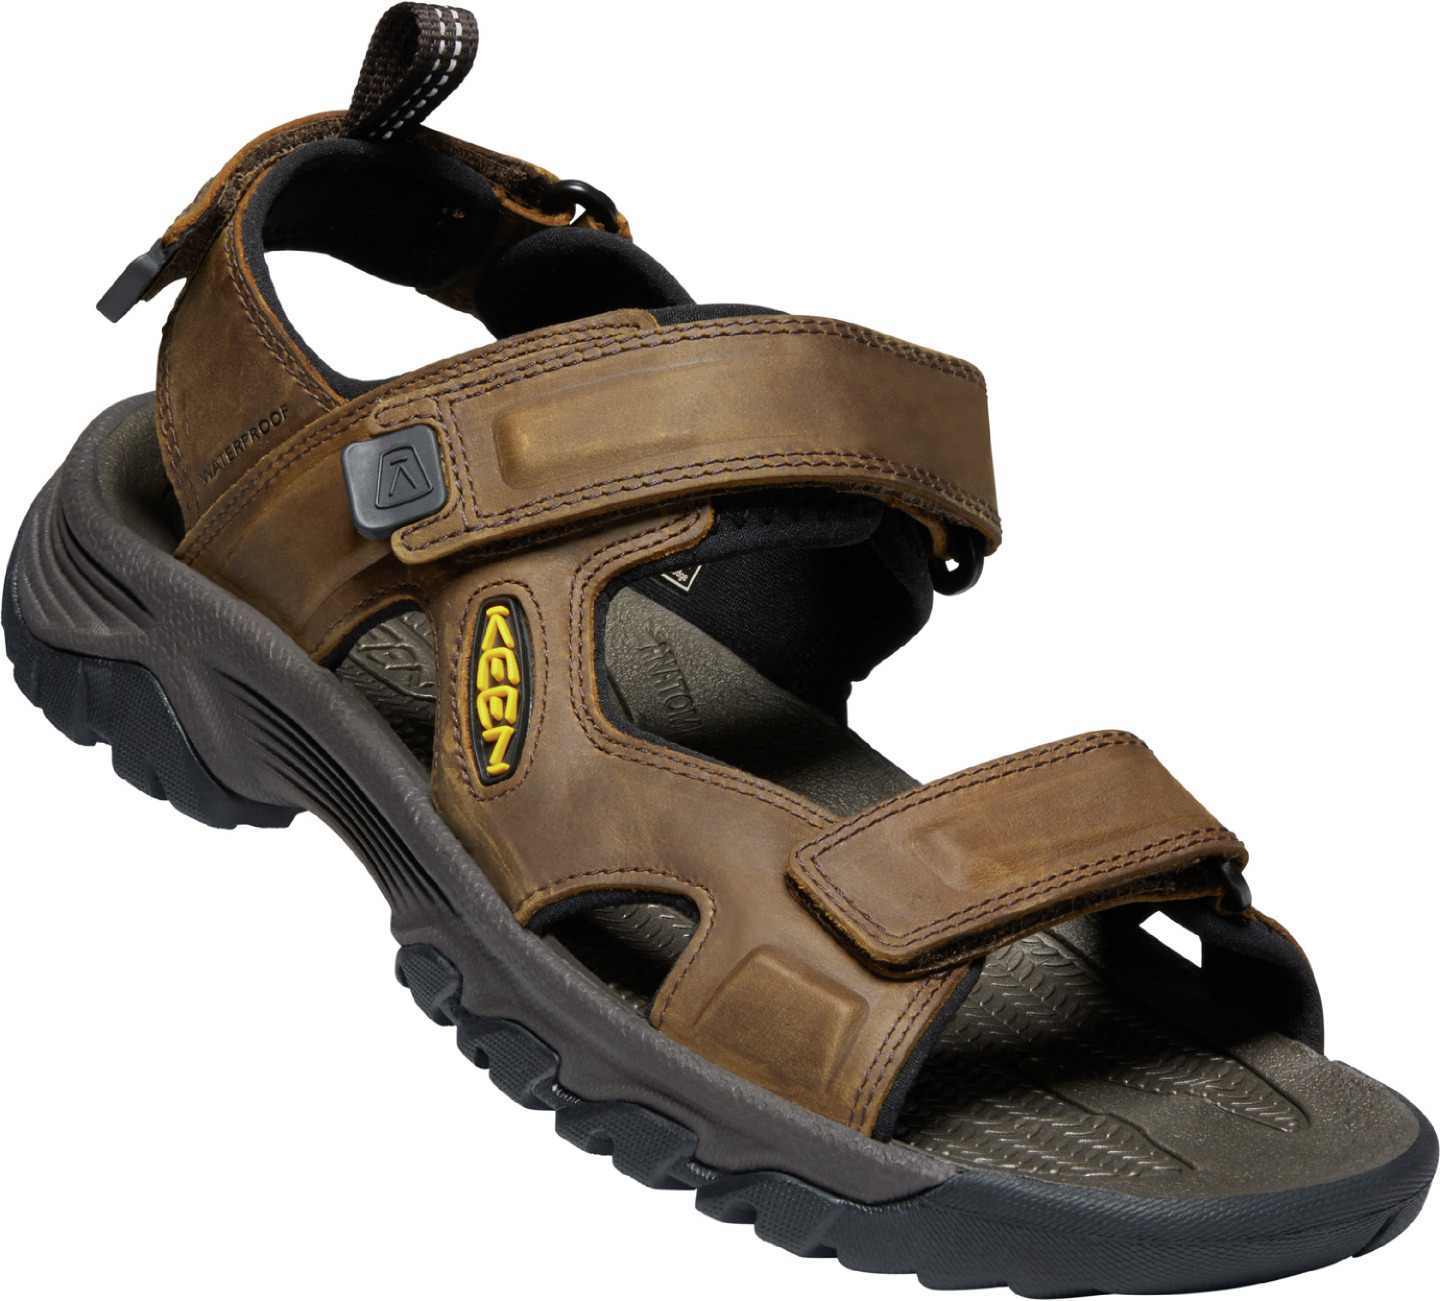 Keen pánské sandály Targhee III Open Toe Sandal Men - Bison/Mulch Barva: bison/mulch, Velikost: 11 UK (46 EU / 30 cm)